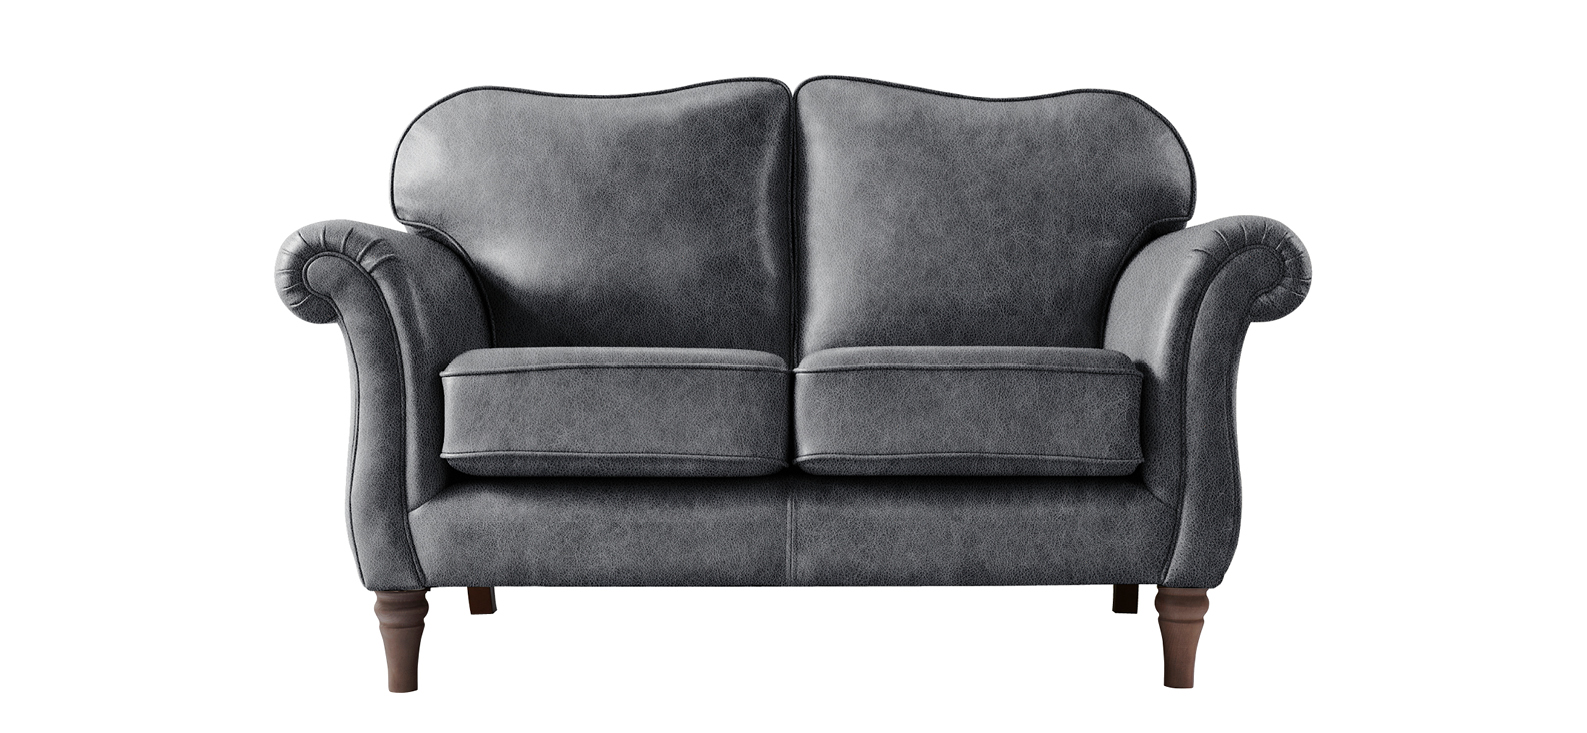 Burton 2 Seater Leather Sofa